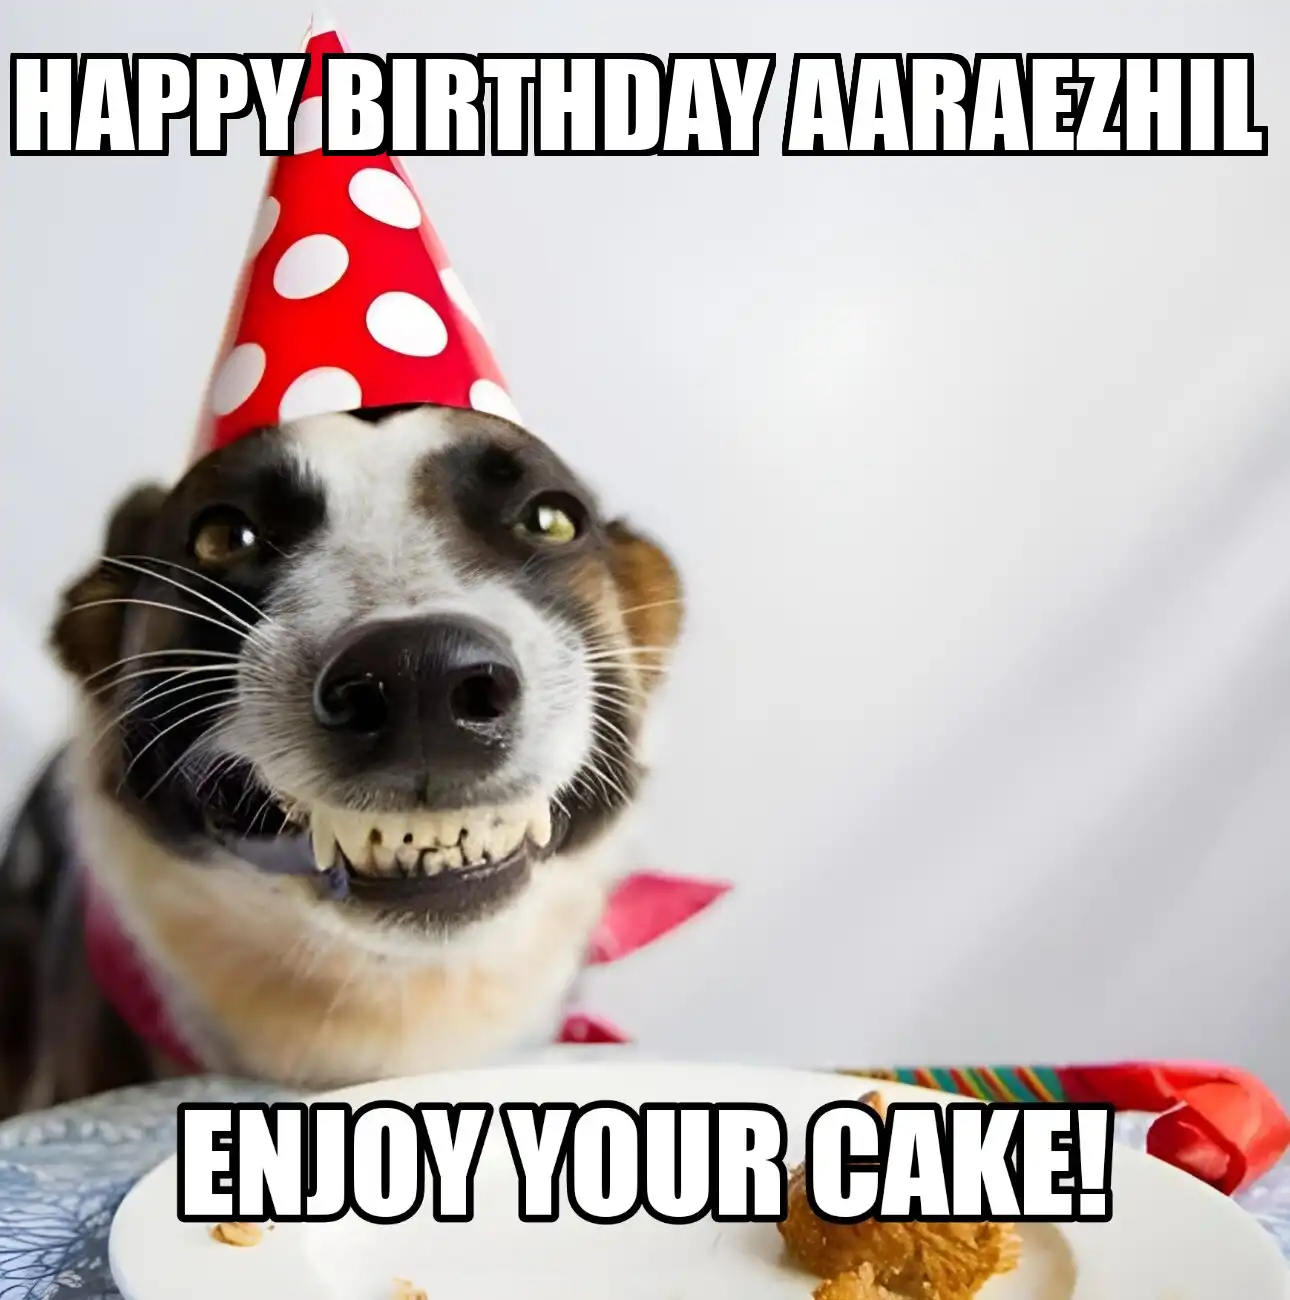 Happy Birthday Aaraezhil Enjoy Your Cake Dog Meme